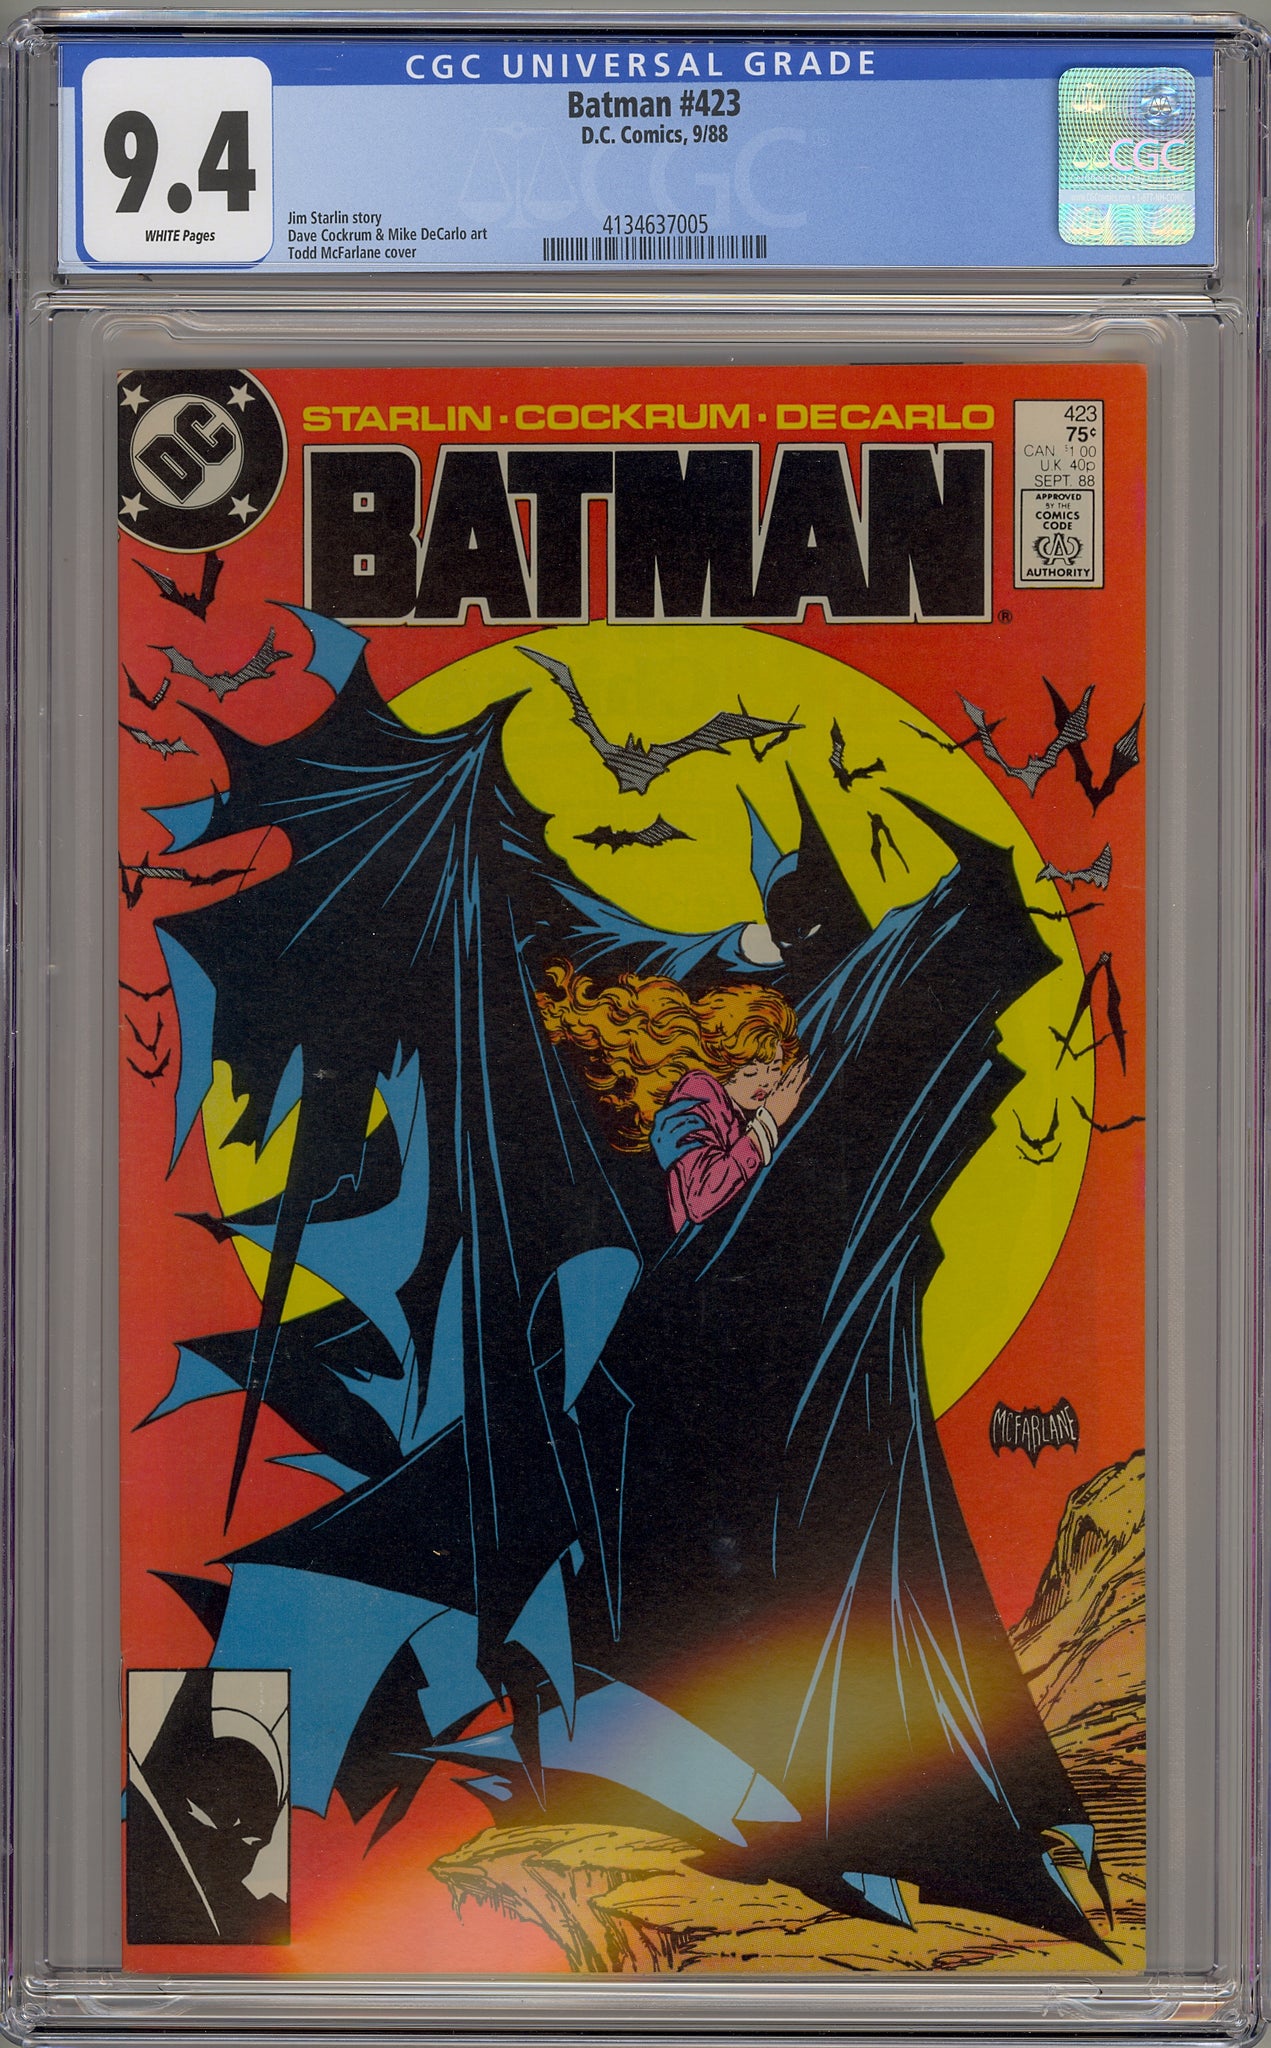 Batman #423 (1988) Classic Todd McFarlane cover